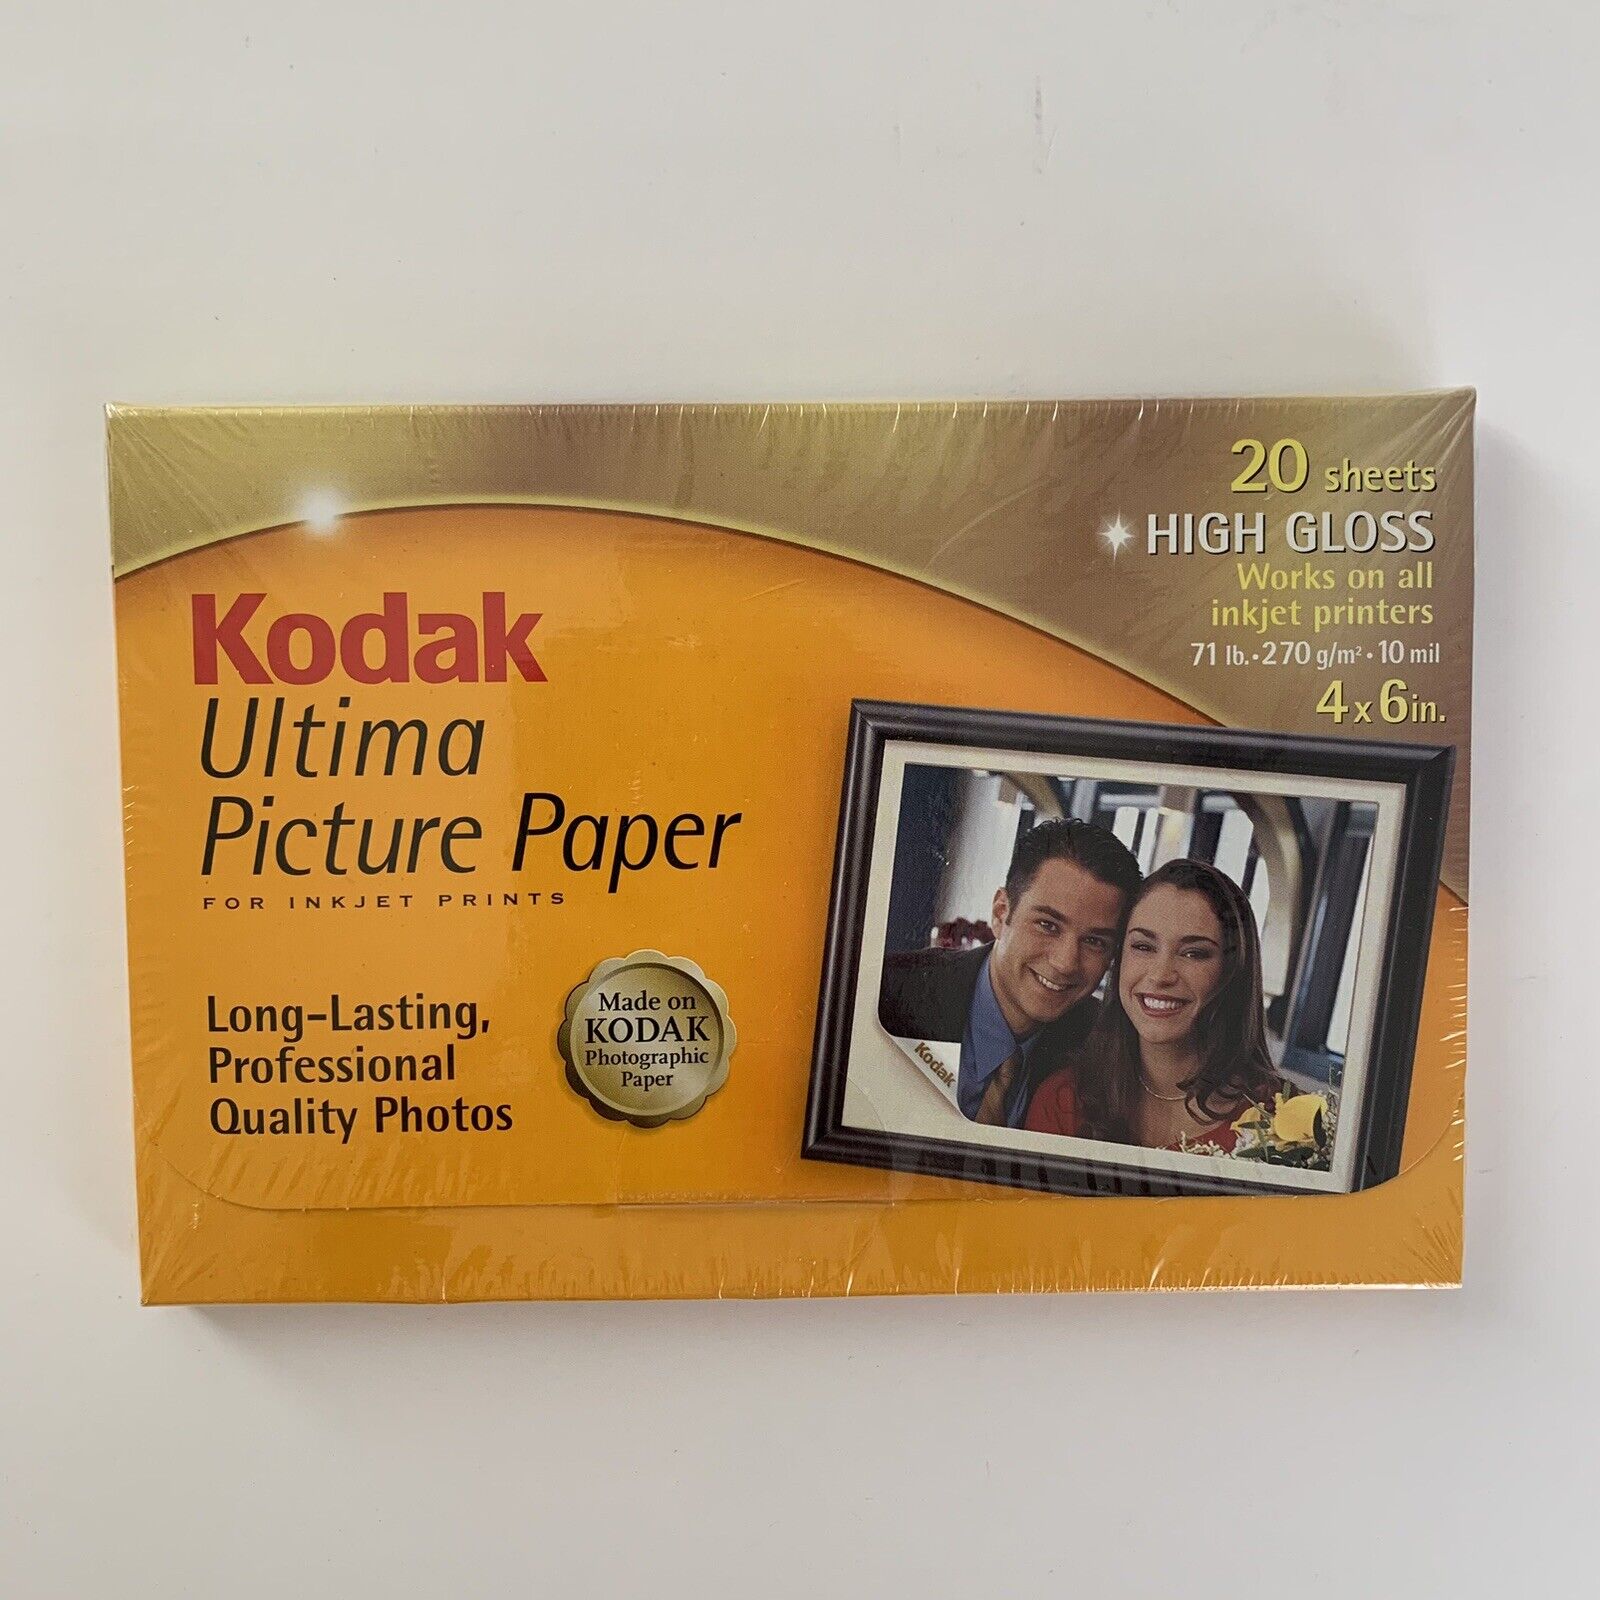 Kodak Ultima Picture Paper 20 Sheets High Gloss 4x6 For Inkjet Printers 808-4931